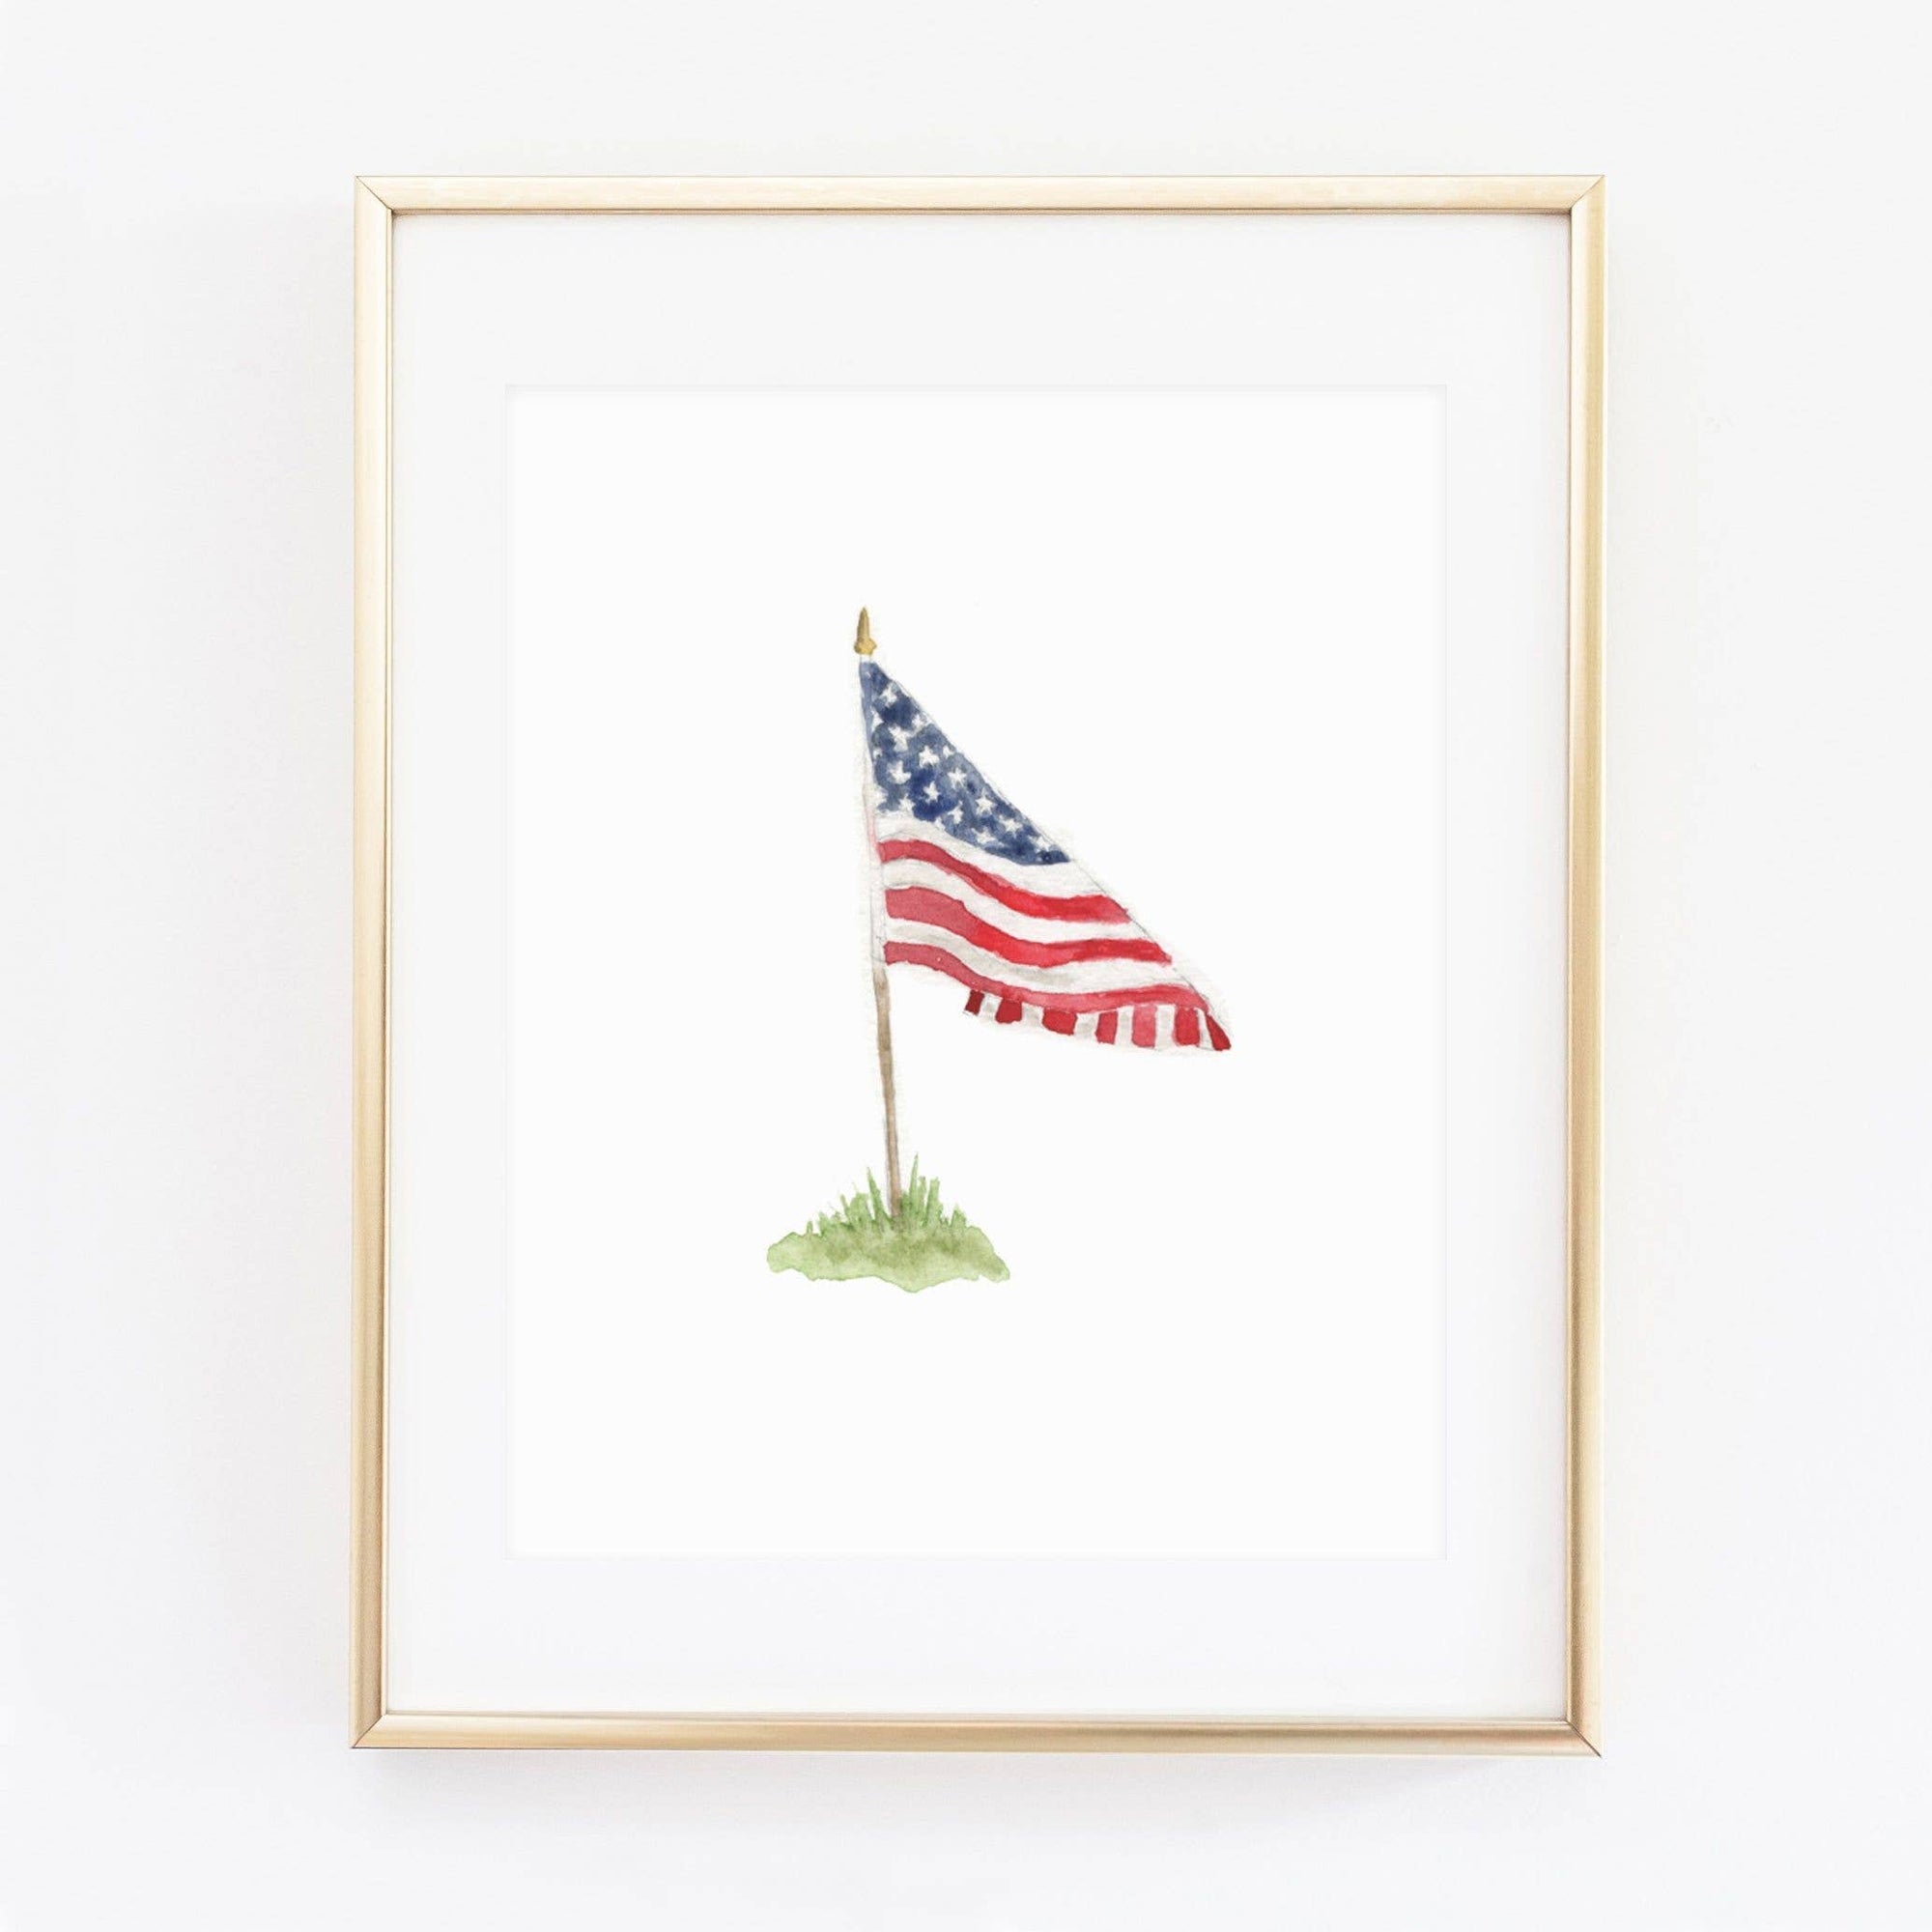 American flag art print - The Preppy Bunny